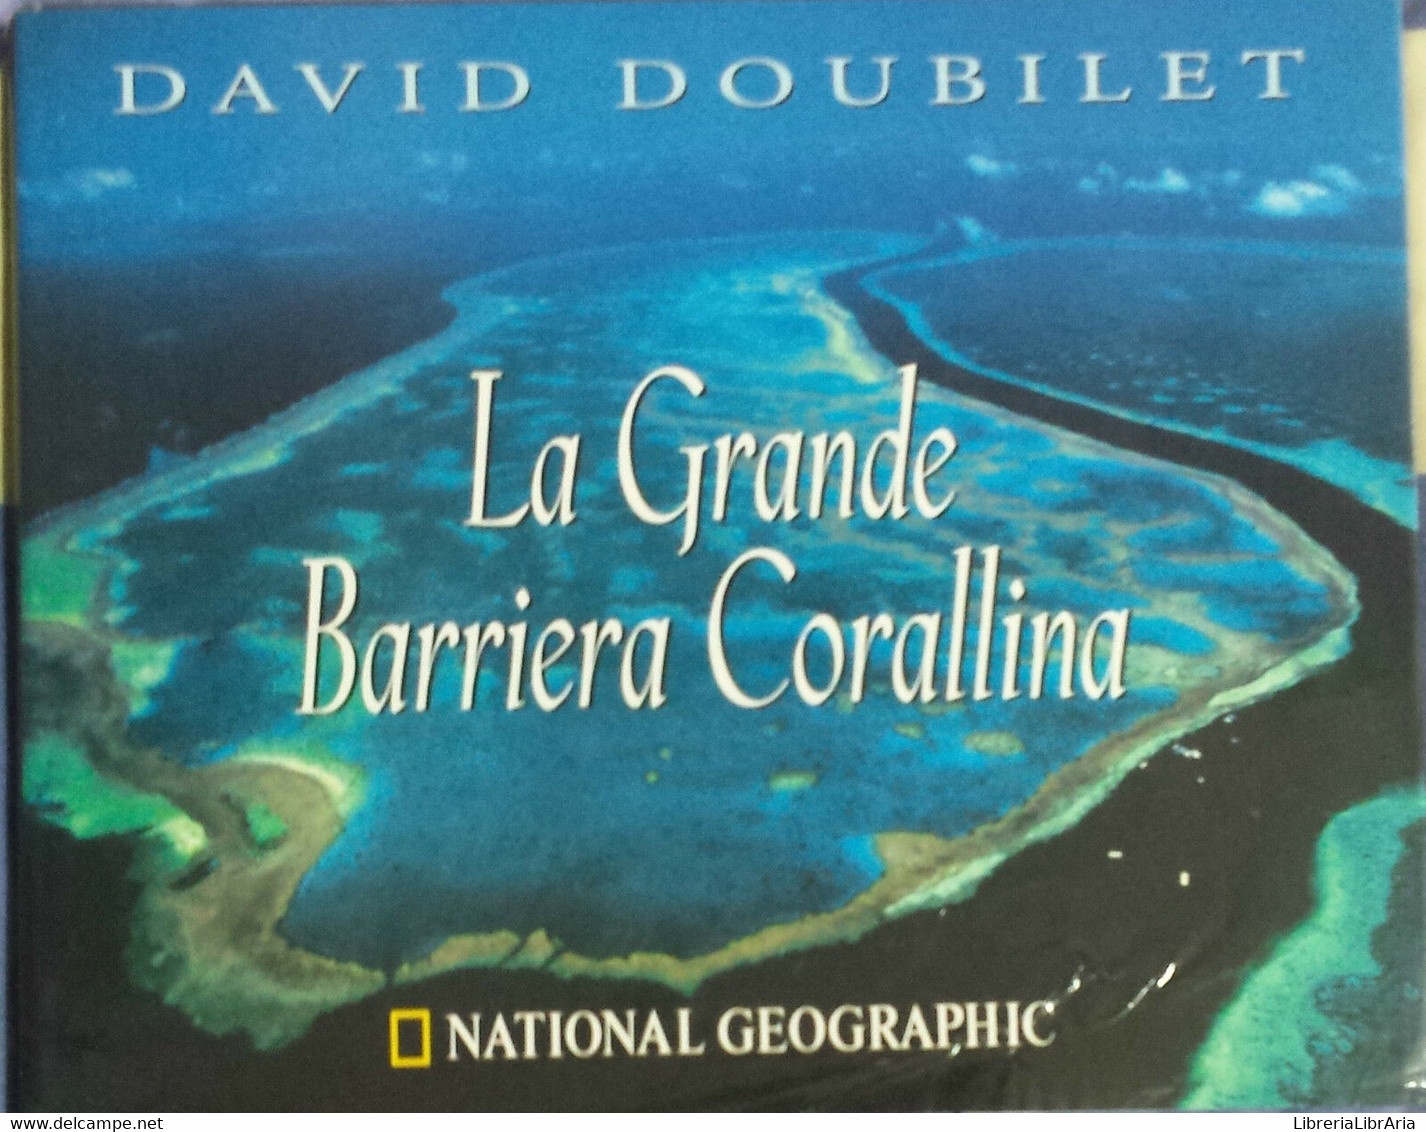 La Grande Barriera Corallina - David Doubilet - White Star - 2003 - G - Enciclopedias